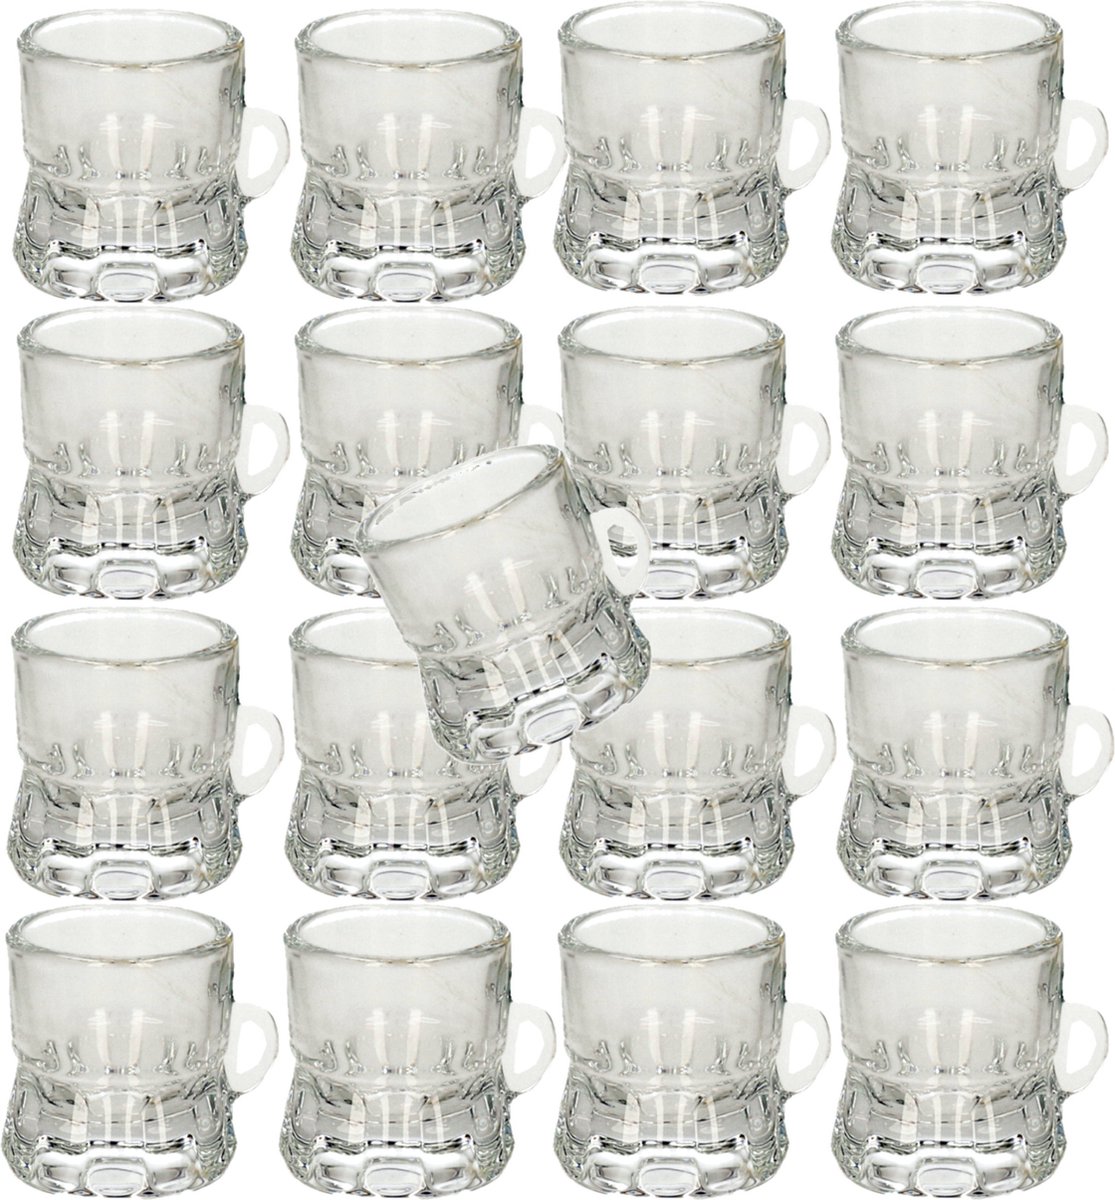 Set van 30x stuks shotglas vorm bierpul glaasje/glas met handvat van 2cl - Feestjes/verjaardag - Oktoberfest